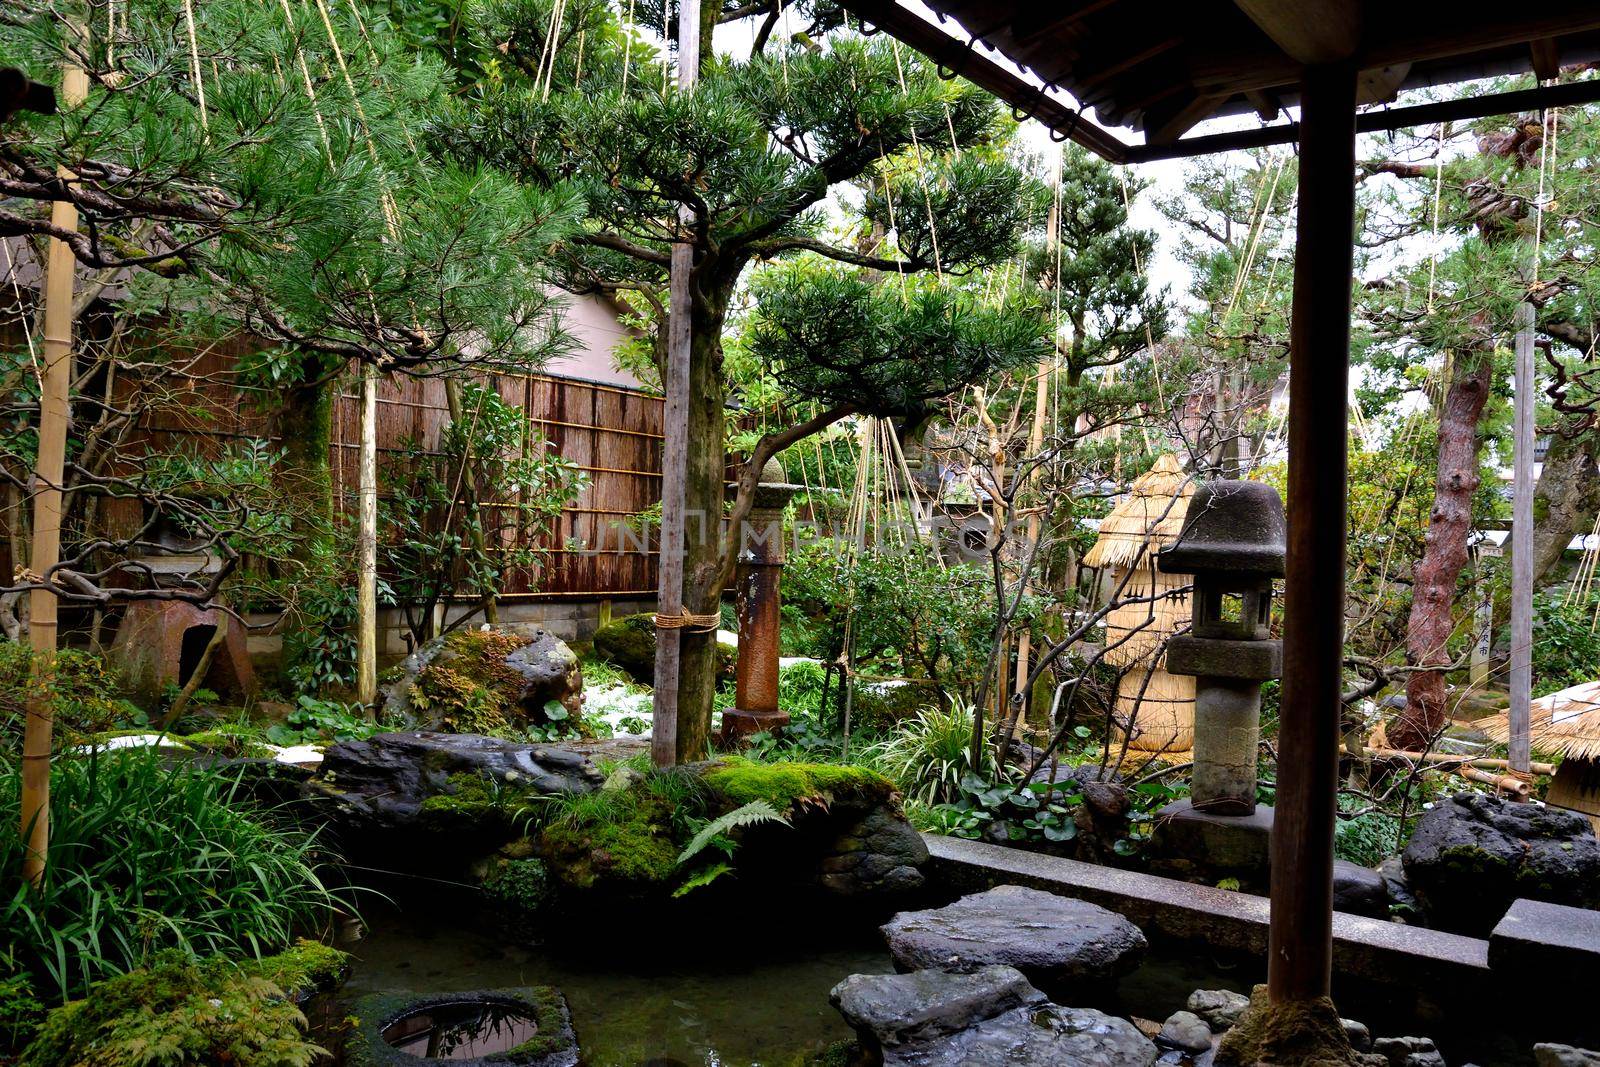 View of the garden in the Nomura samurai house by silentstock639